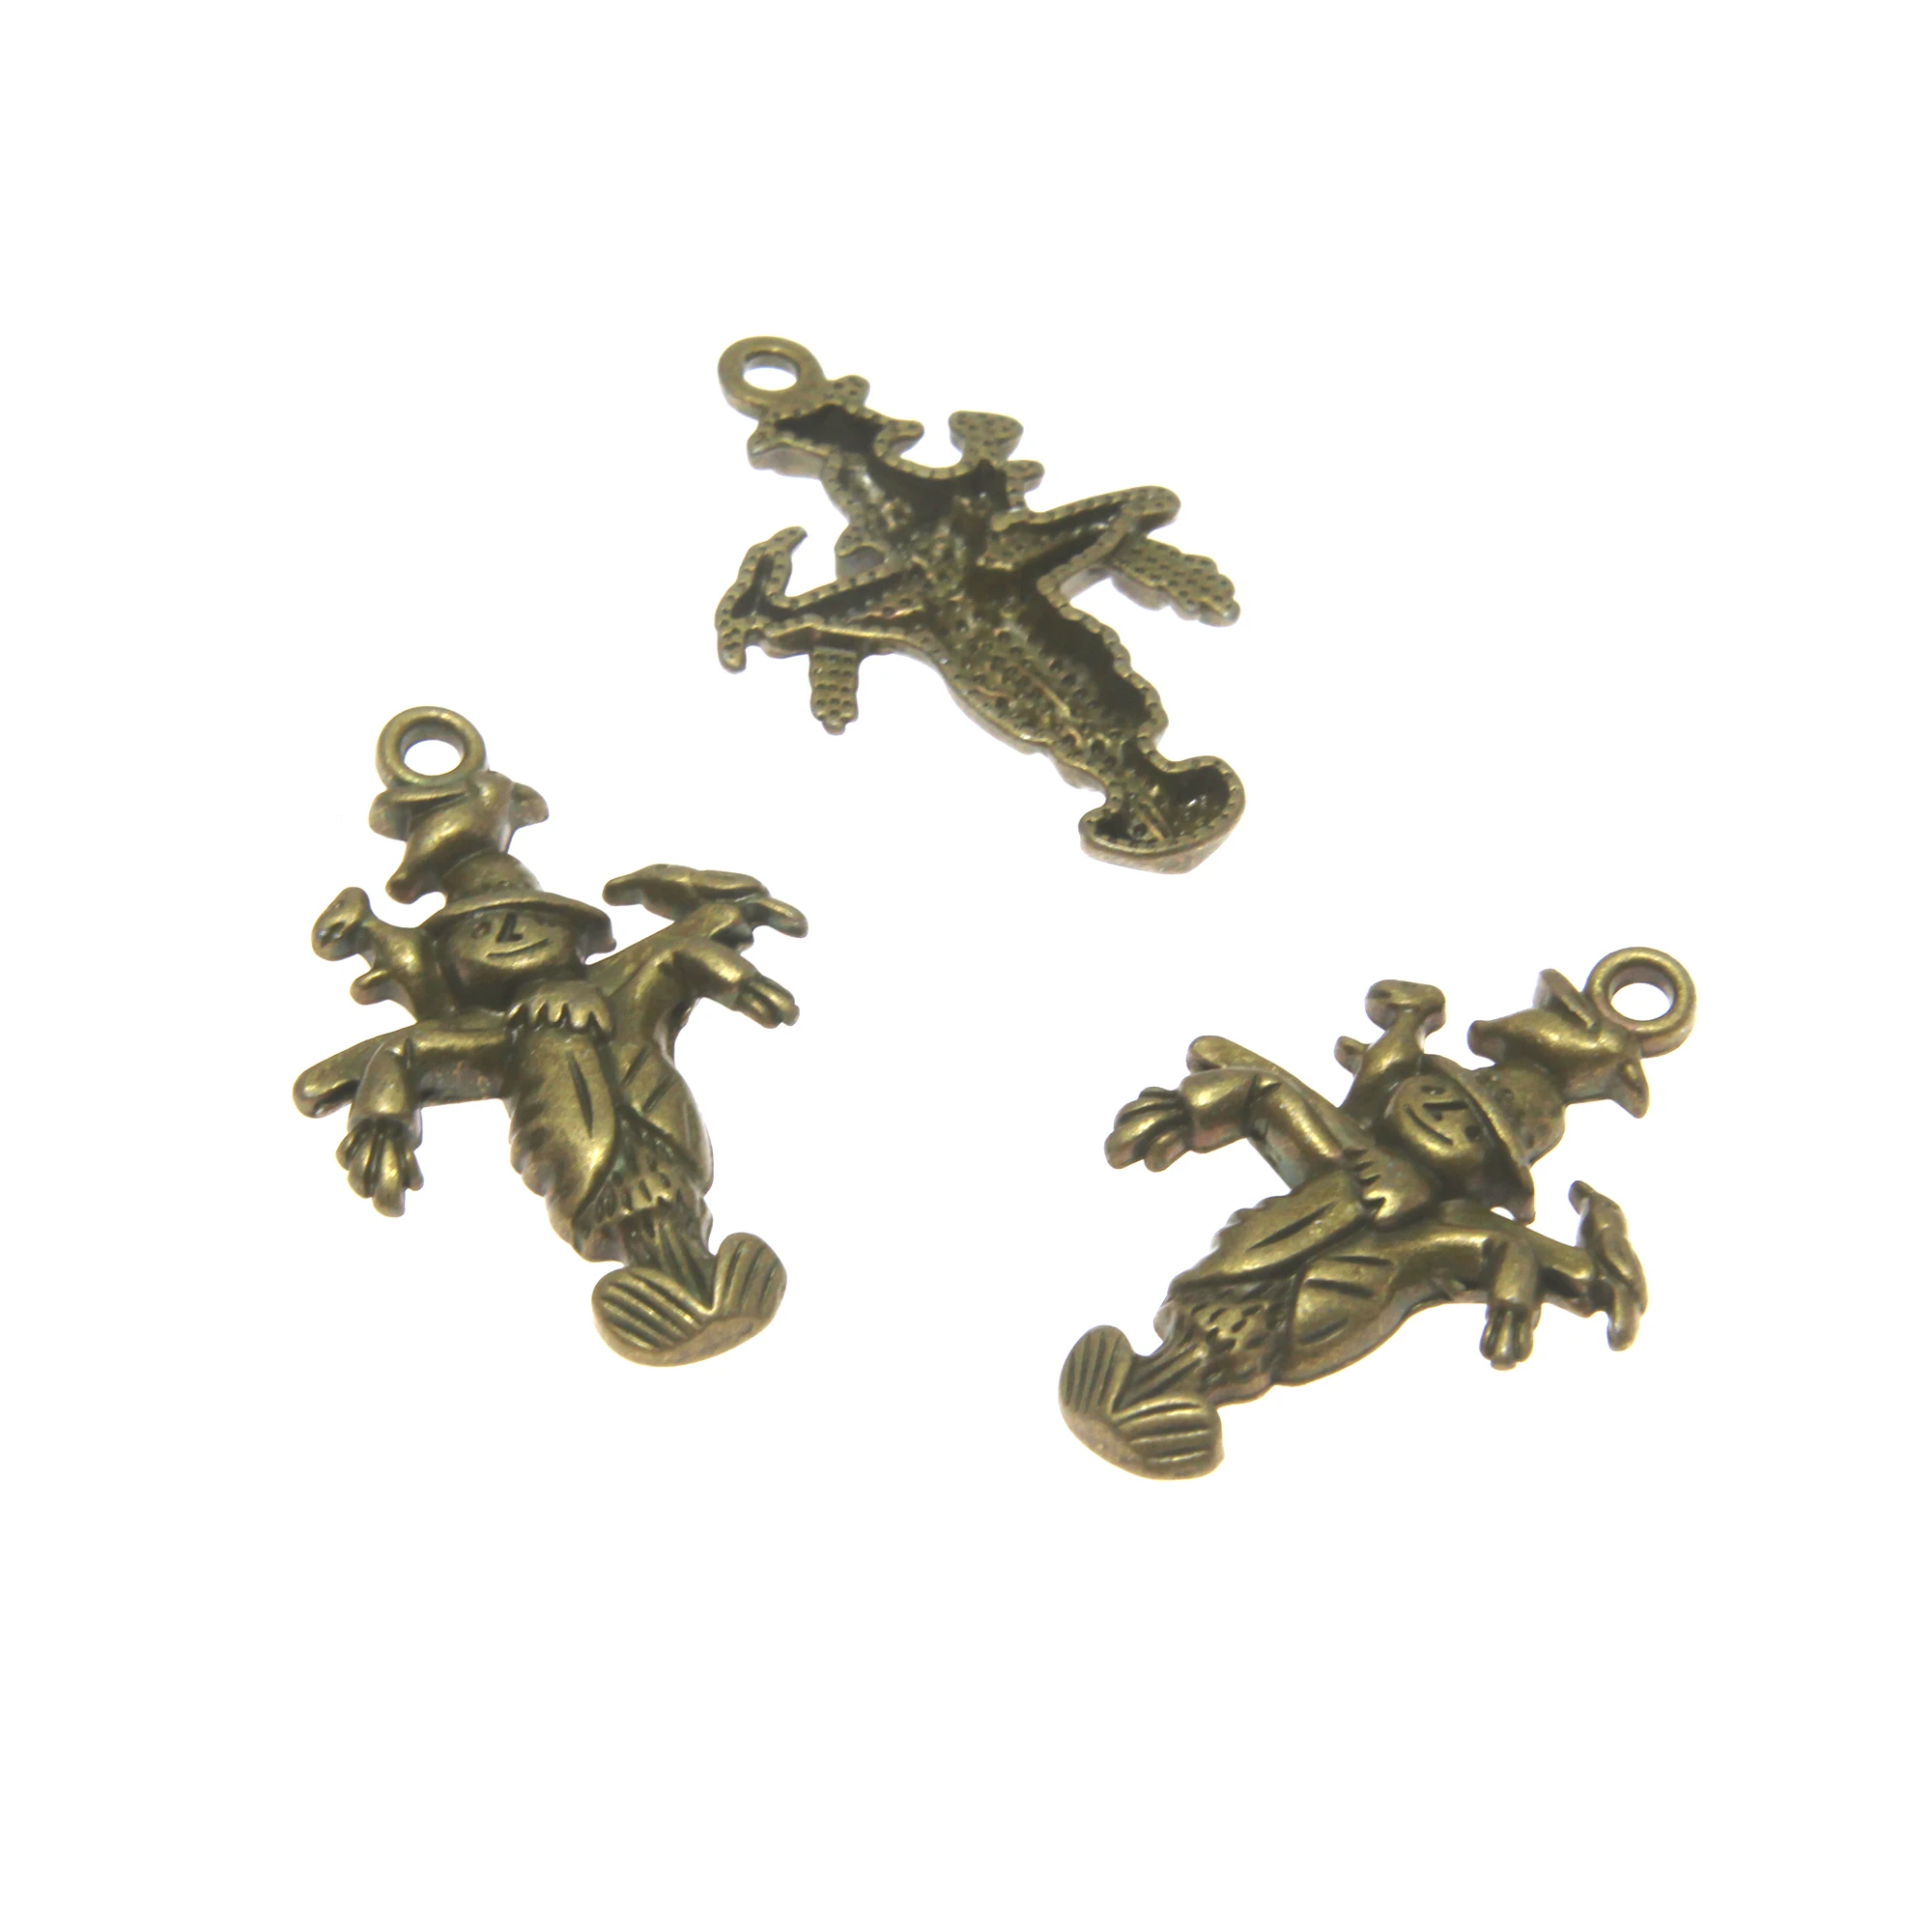 

15pcs scarecrow charms Antique bronze tone scarecrow charm pendant DIY jewelry findings 32x21mm